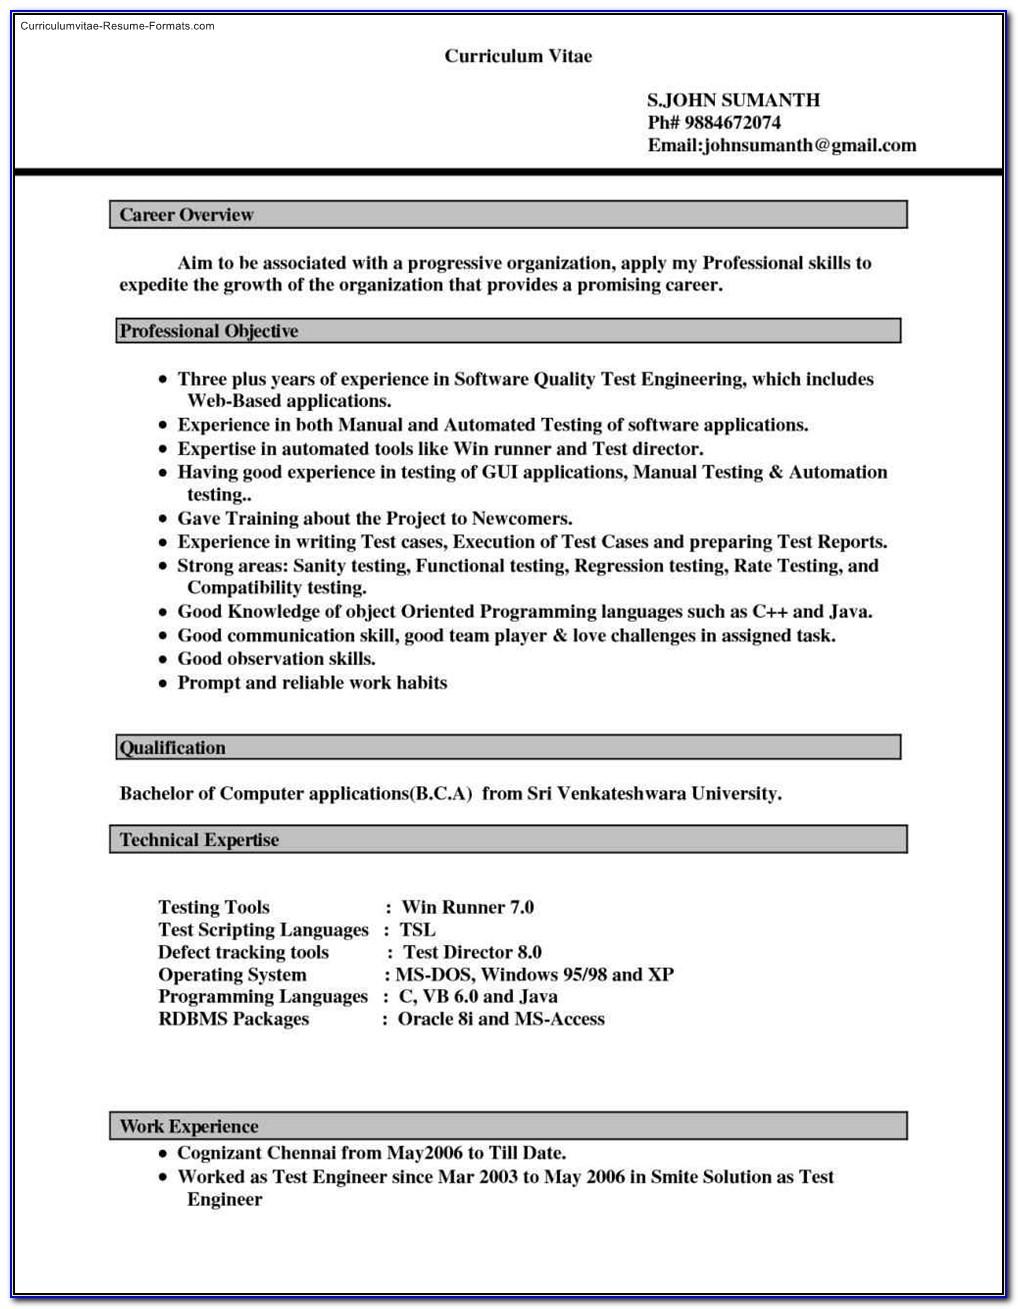 Resume Layout Microsoft Word 2007